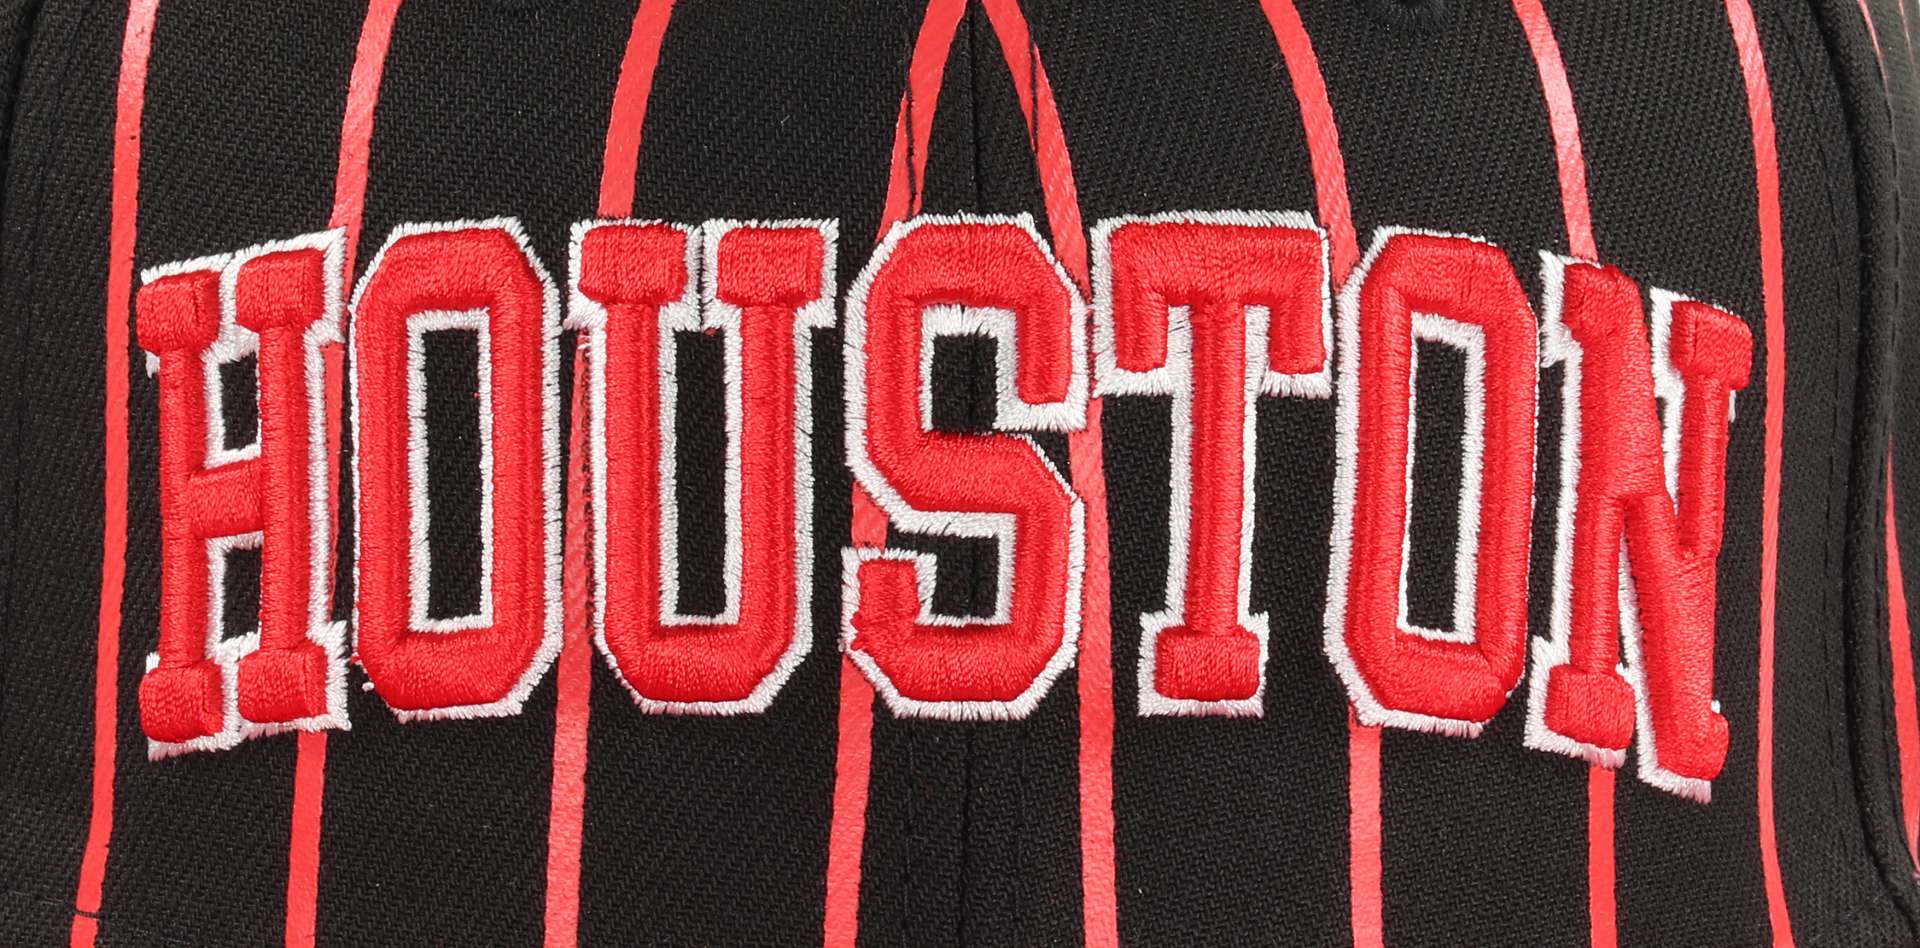 Houston Rockets City Arch Black 9Fifty Snapback Cap New Era